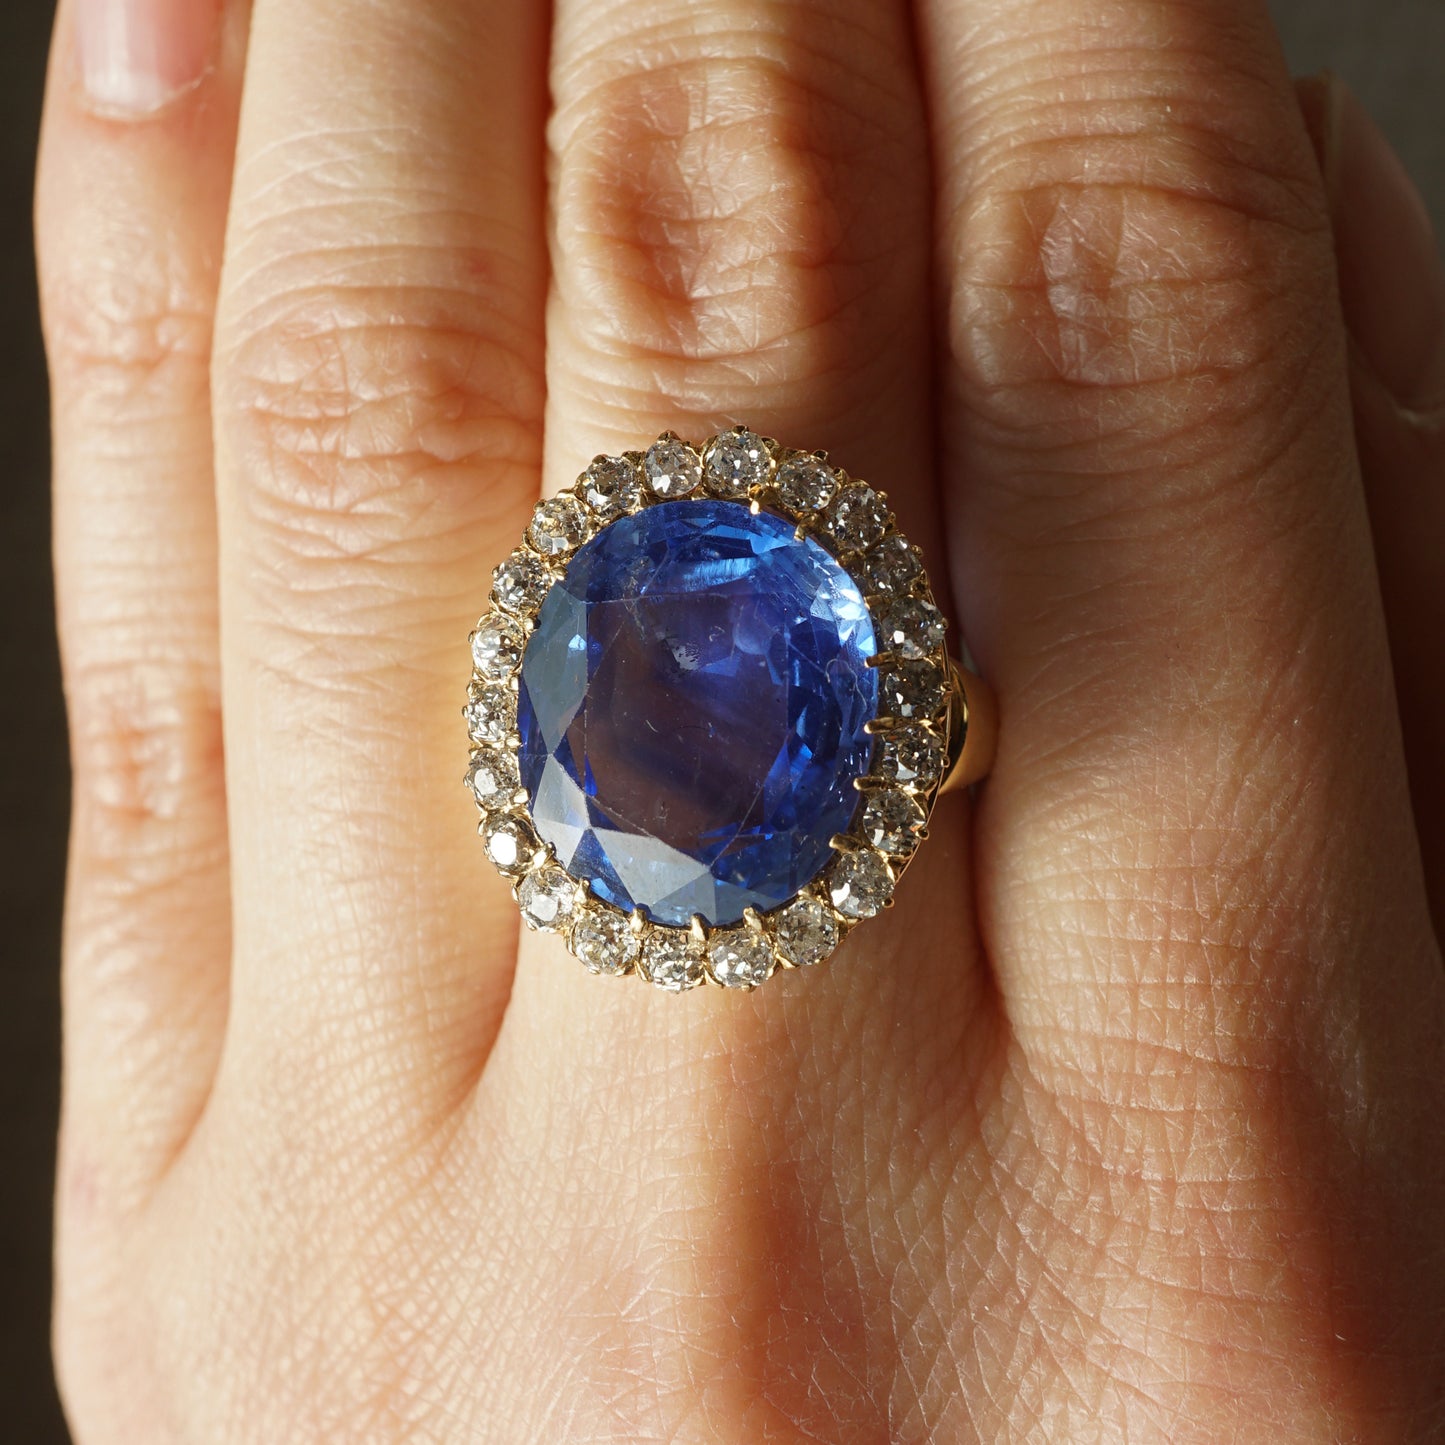 Victorian Ceylon Sapphire & Diamond Cocktail Ring in 18k